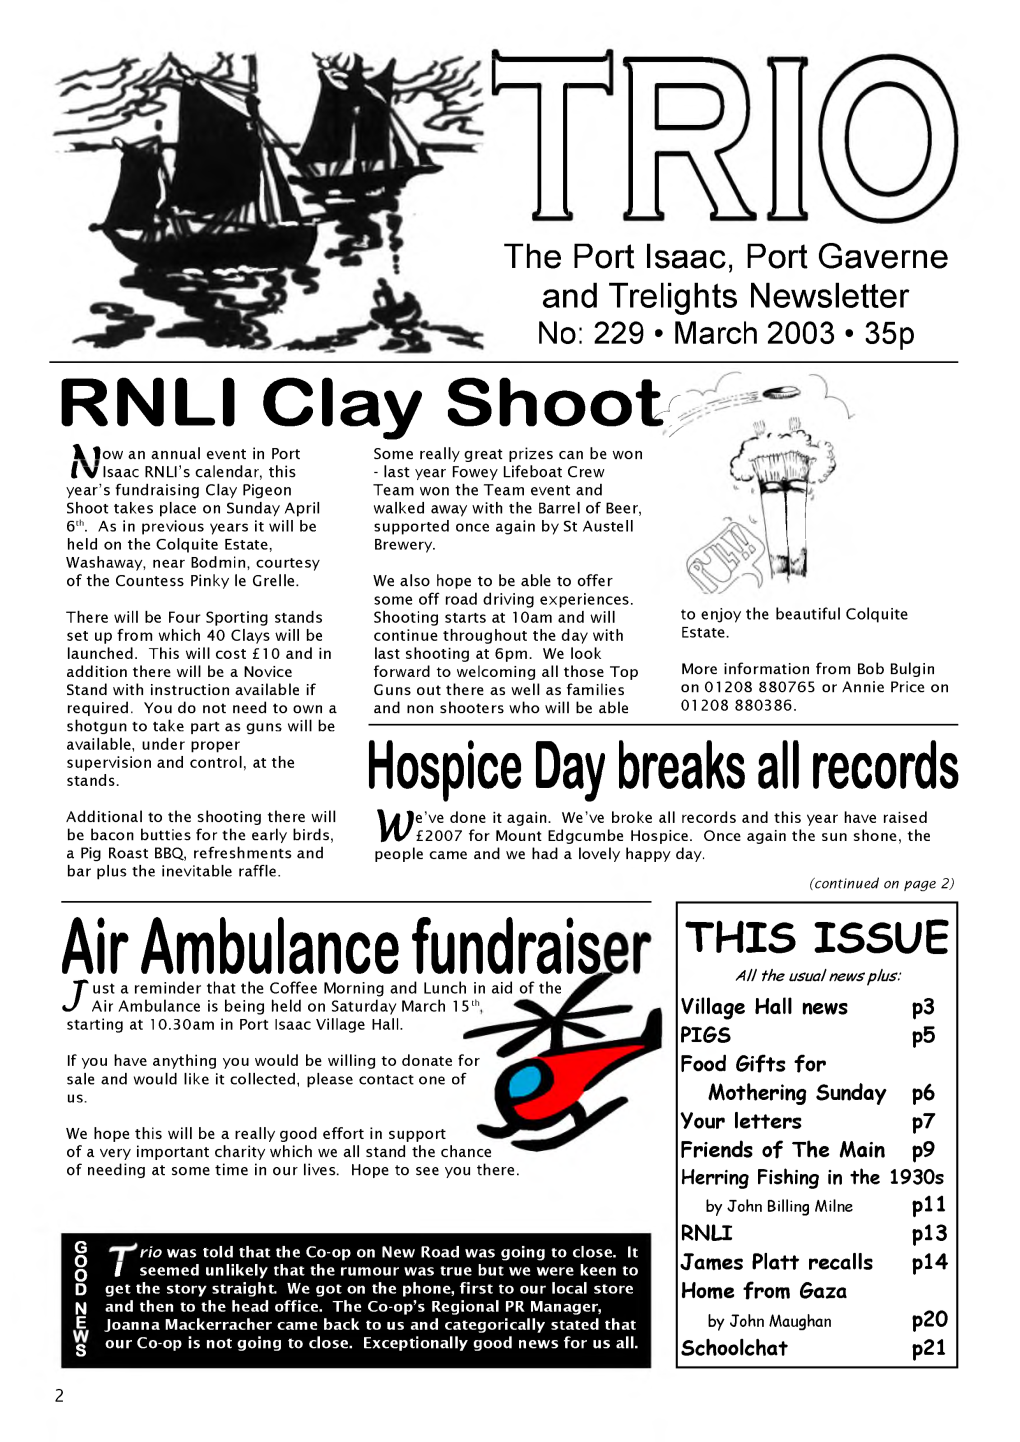 Air Ambulance Fundrais